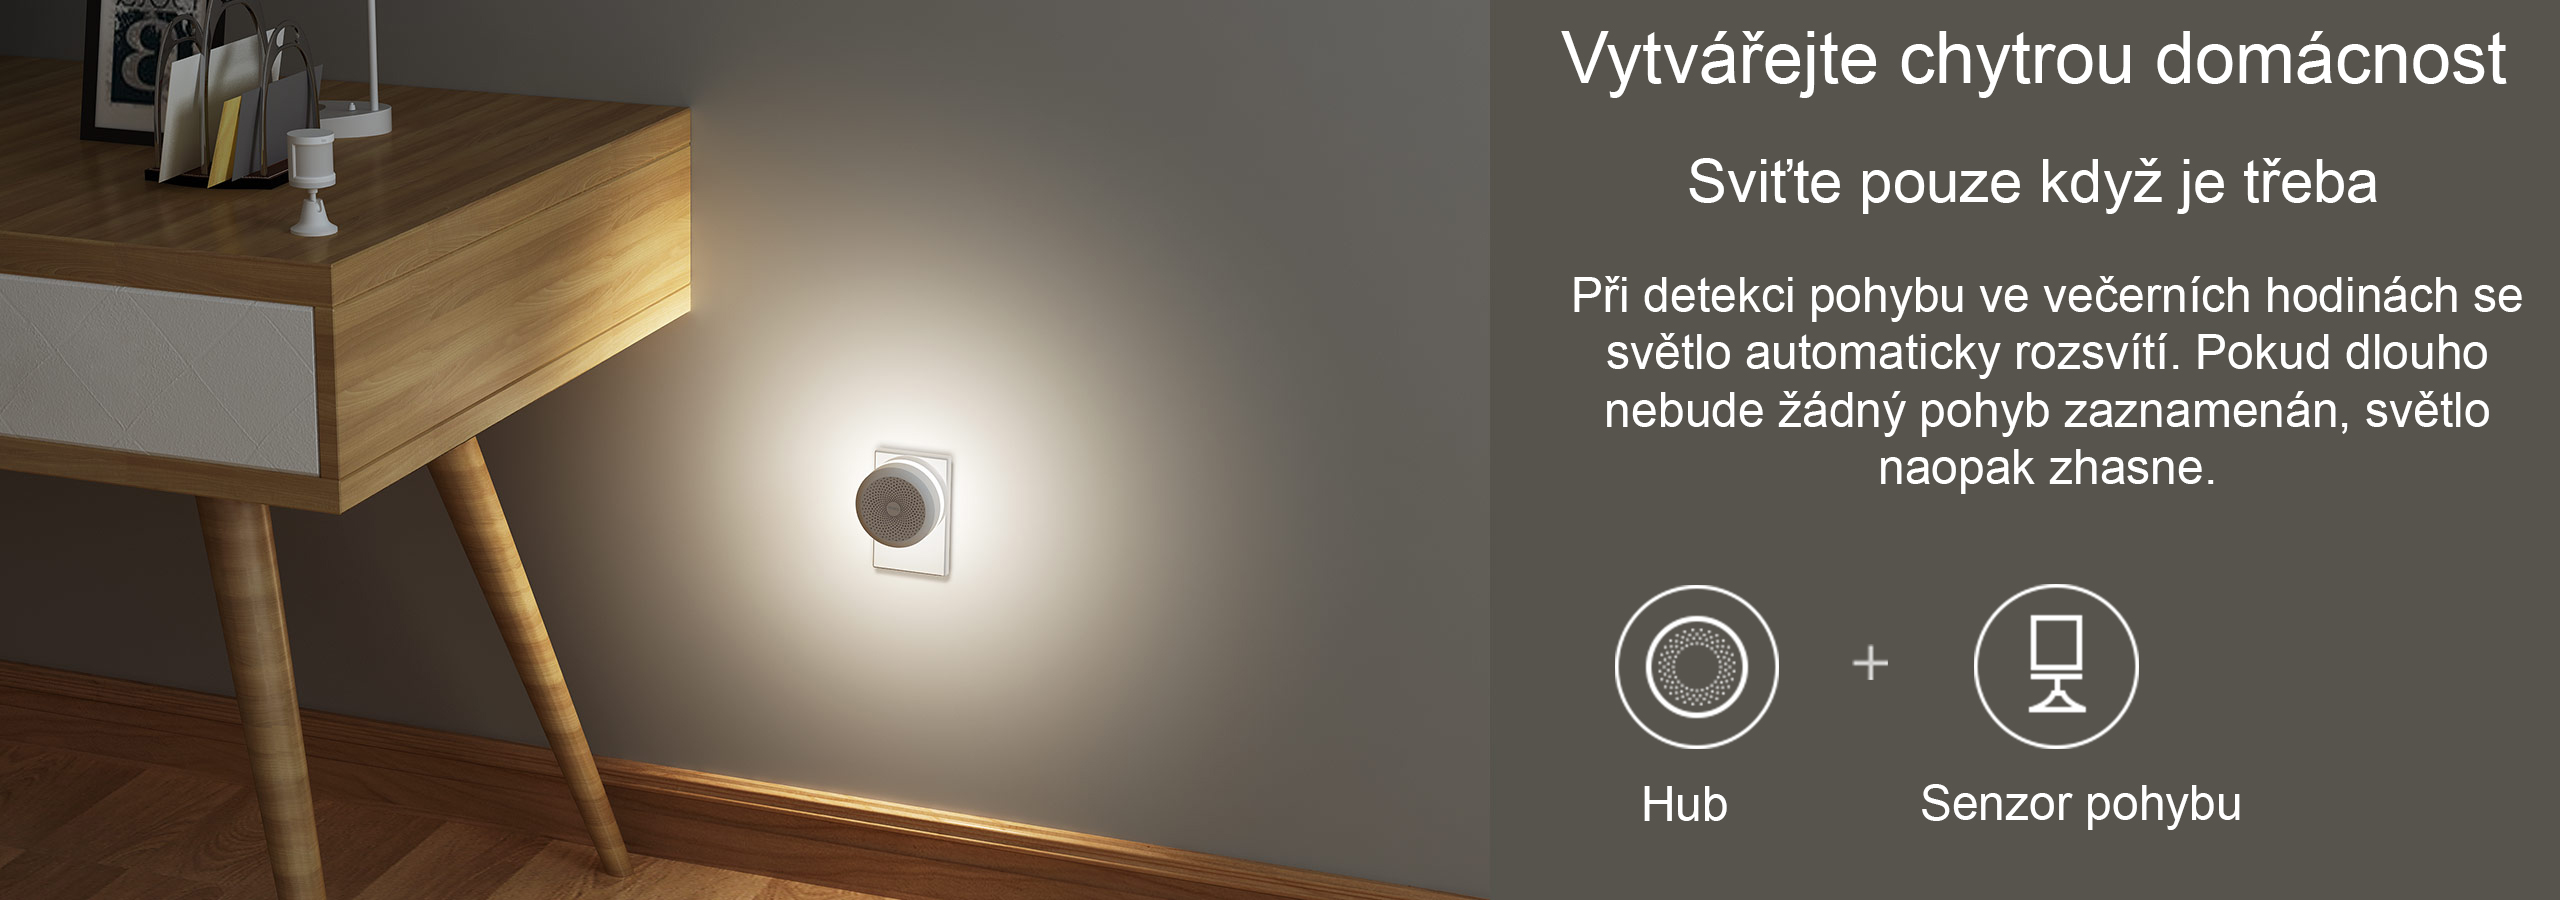 Xiaomi Aqara Hub Smart home osvetleni